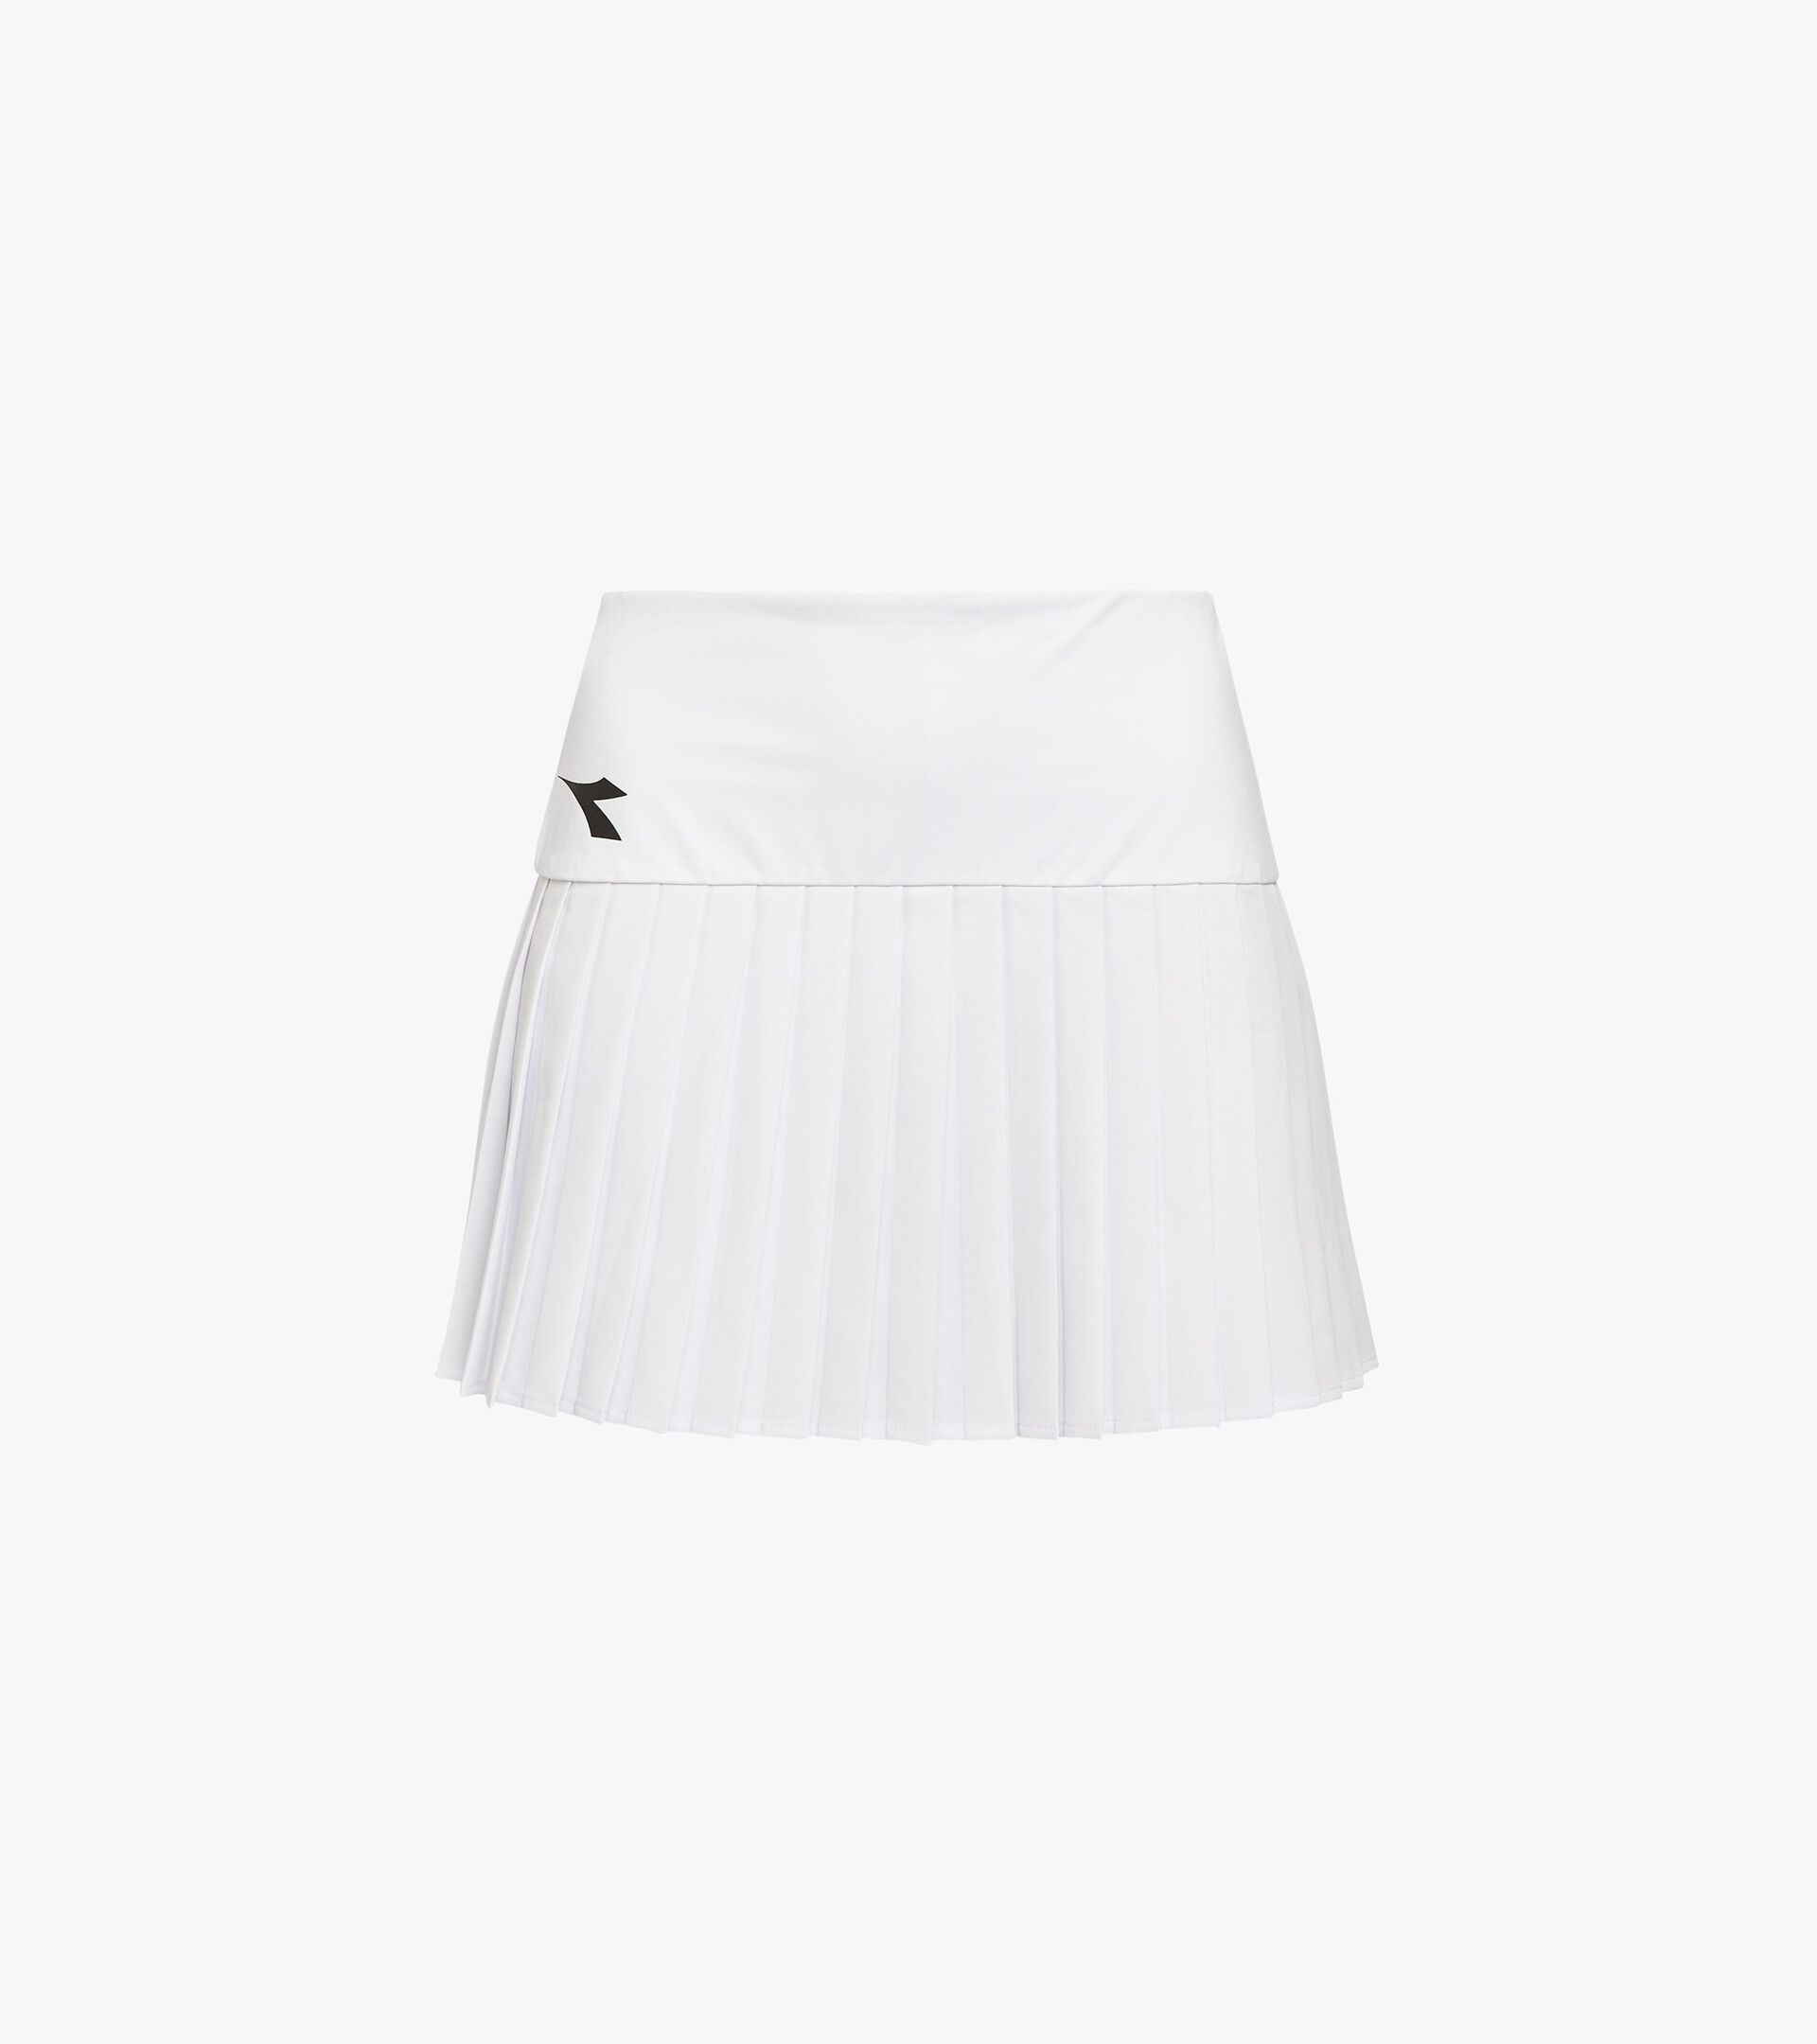 L. SKIRT ICON Tennis skirt - Women - Diadora Online Store US